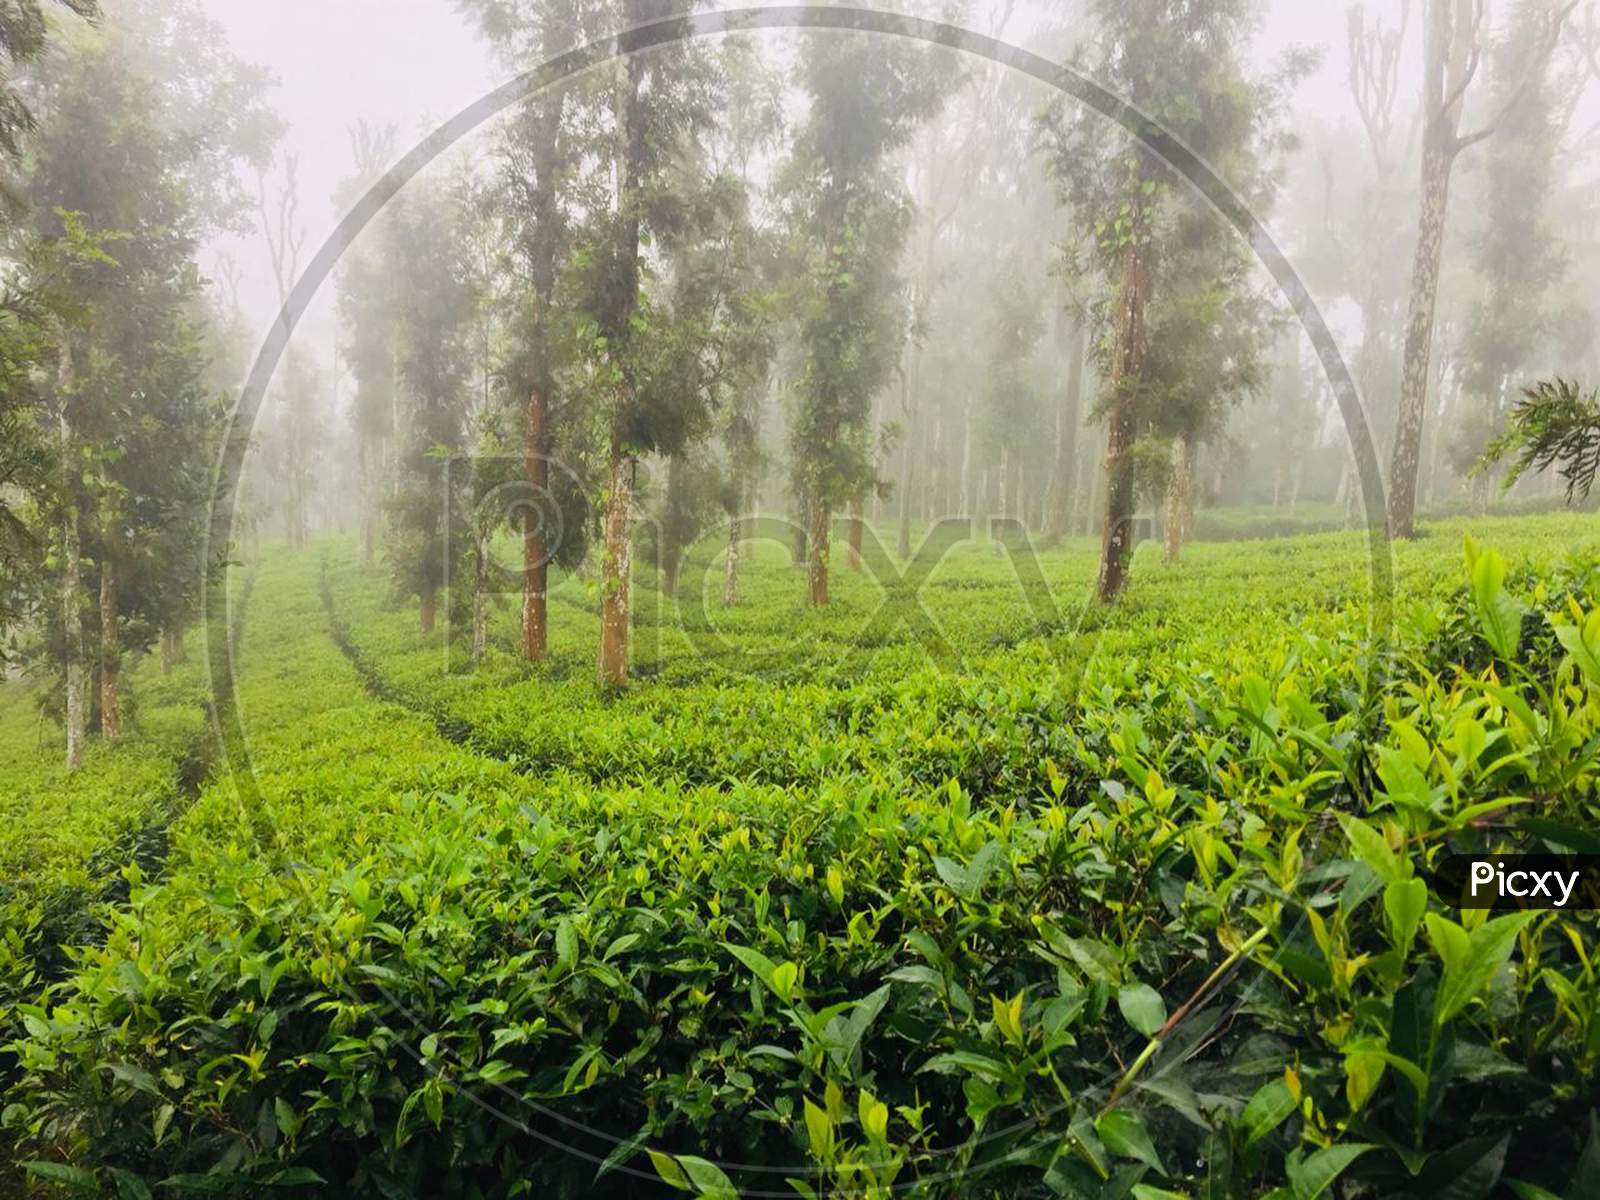 Tea estate in the Misty morning